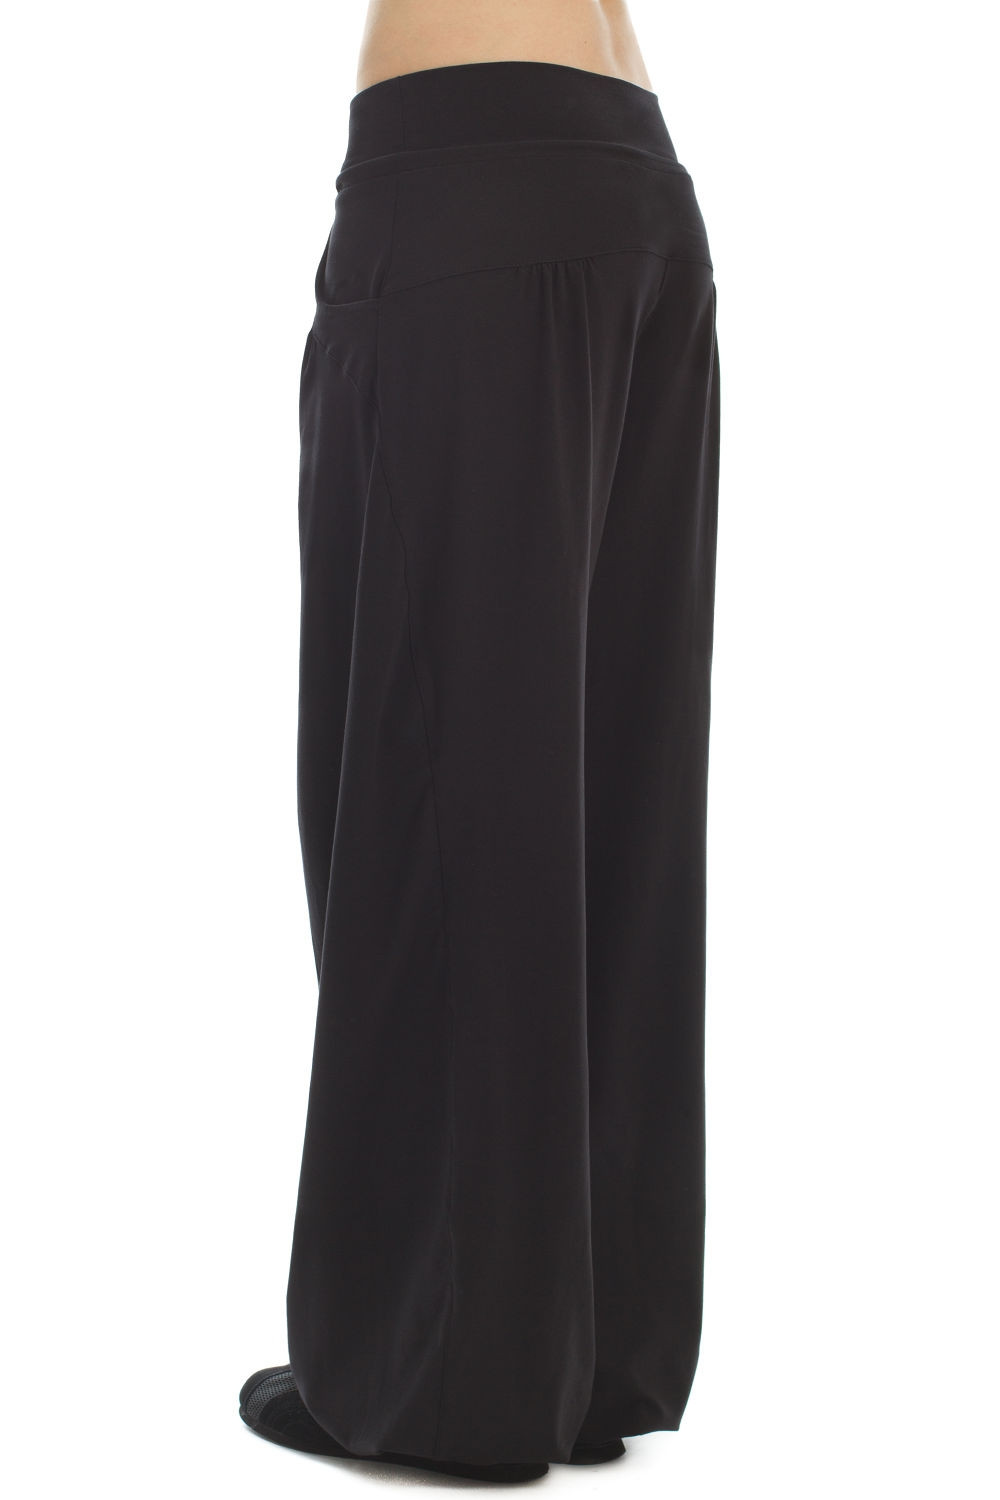 WTE3 Trousers Style Baggy Black, Dance - Winshape